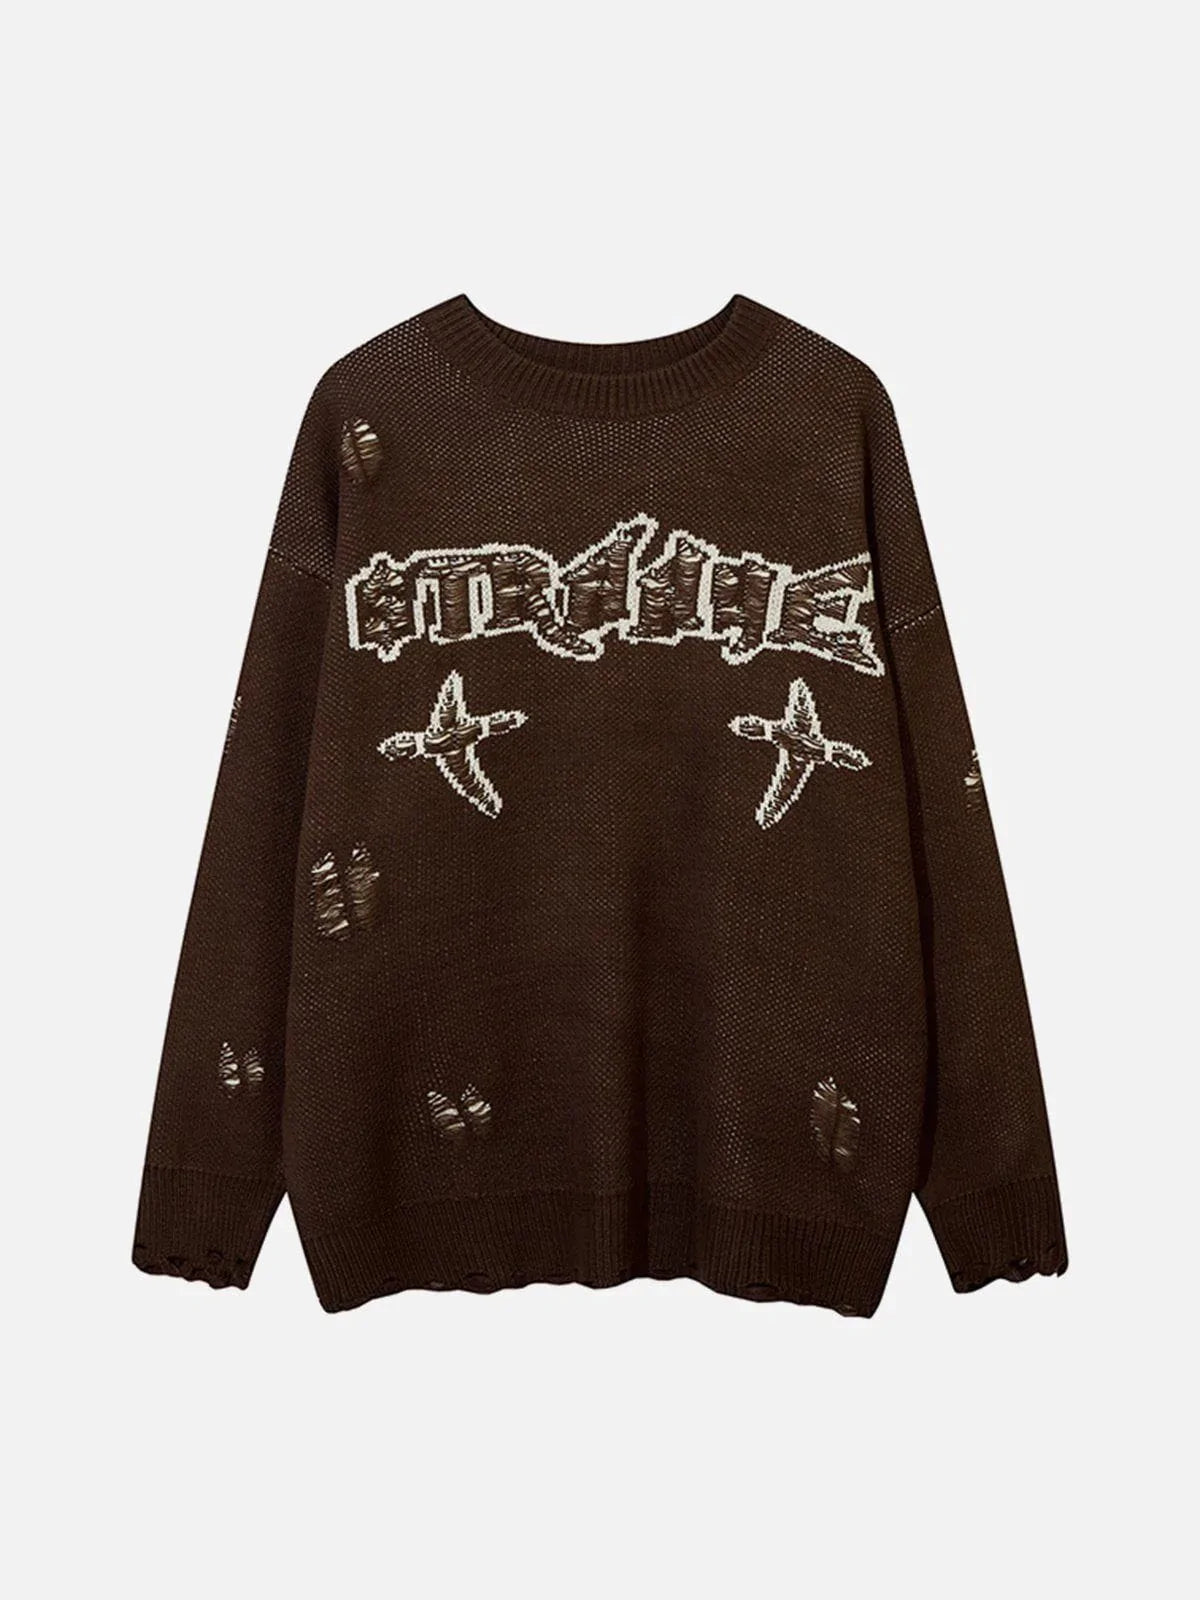 Majesda® - Letter Hole Crucifix Sweater outfit ideas streetwear fashion